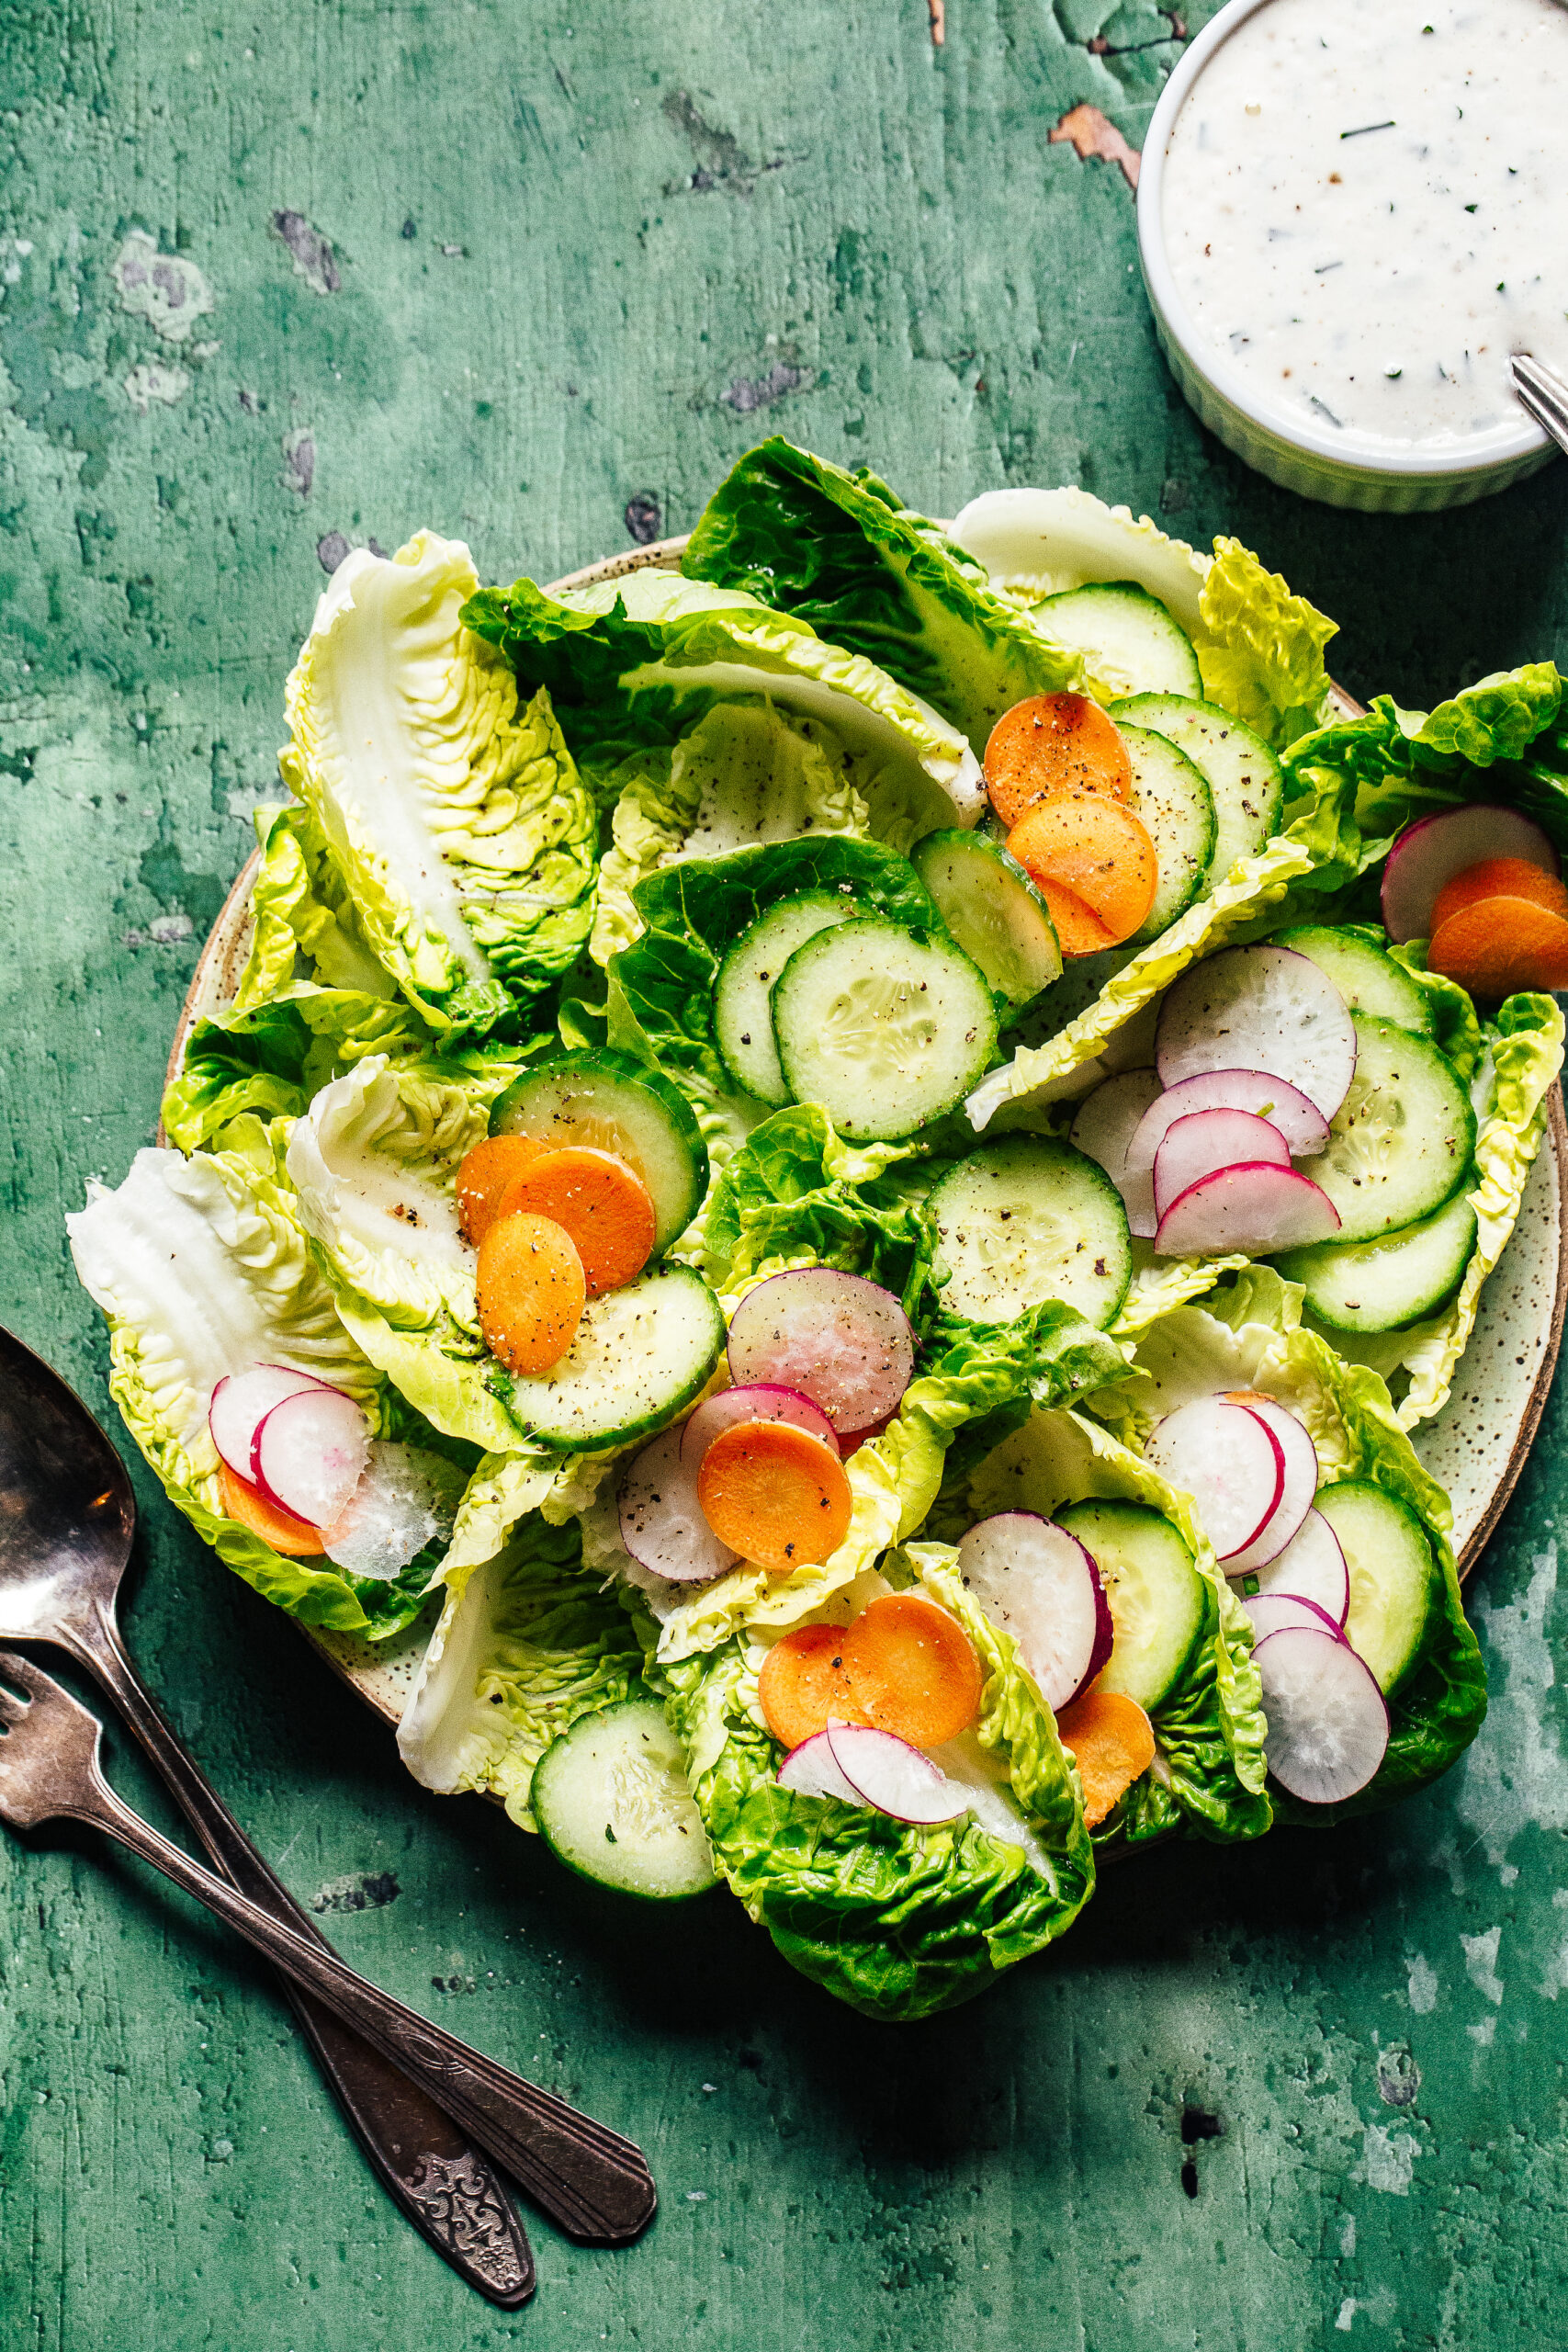 Southern Buttermilk Salad Dressing Recipe